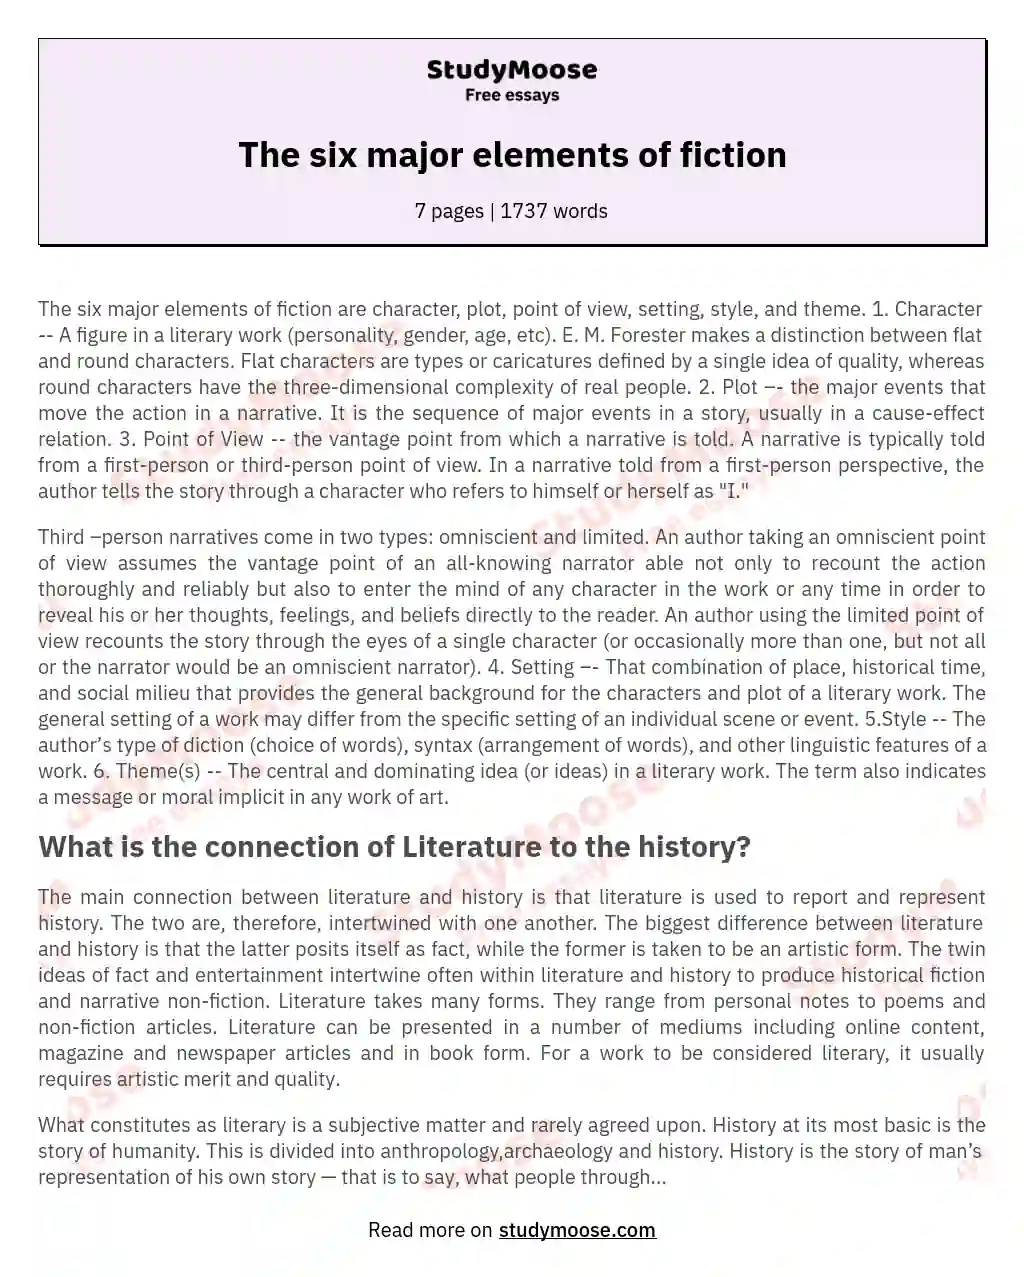 The six major elements of fiction